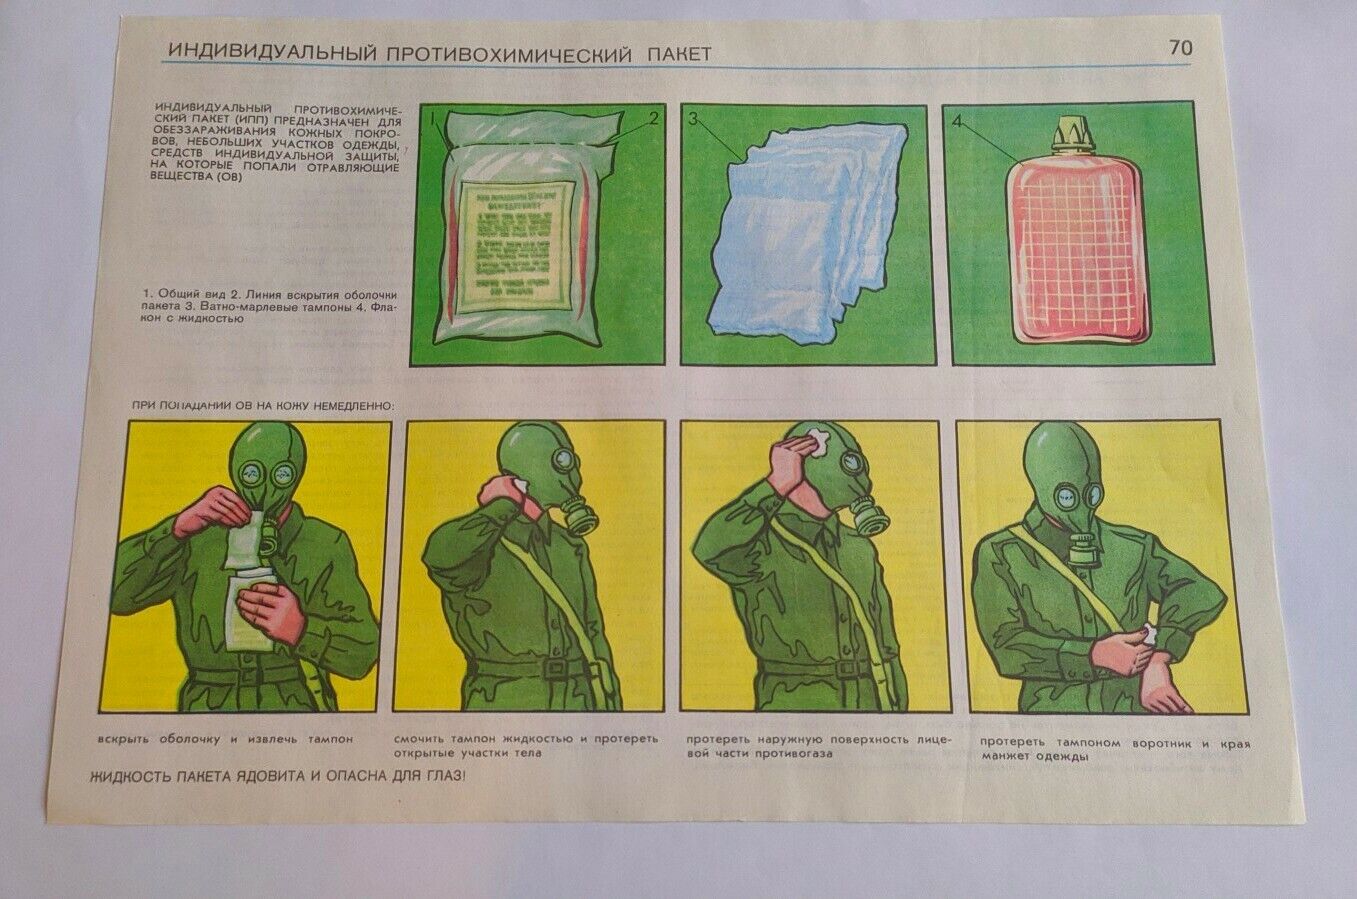 Military Poster Chernobyl Radiation ORIGINAL Nuclear Soviet USSR gas mask №70